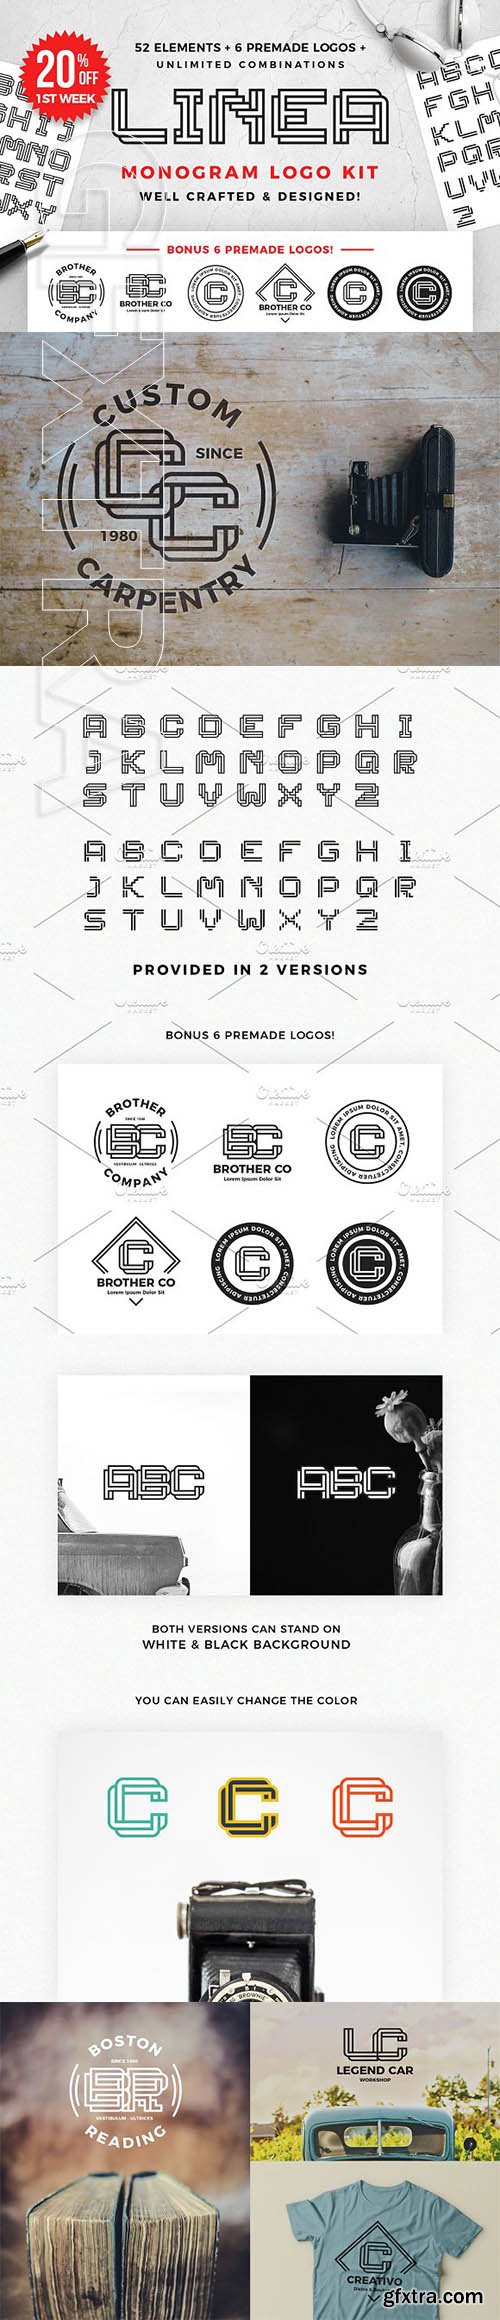 CreativeMarket - LINEA Monogram Logo Kit 2369279